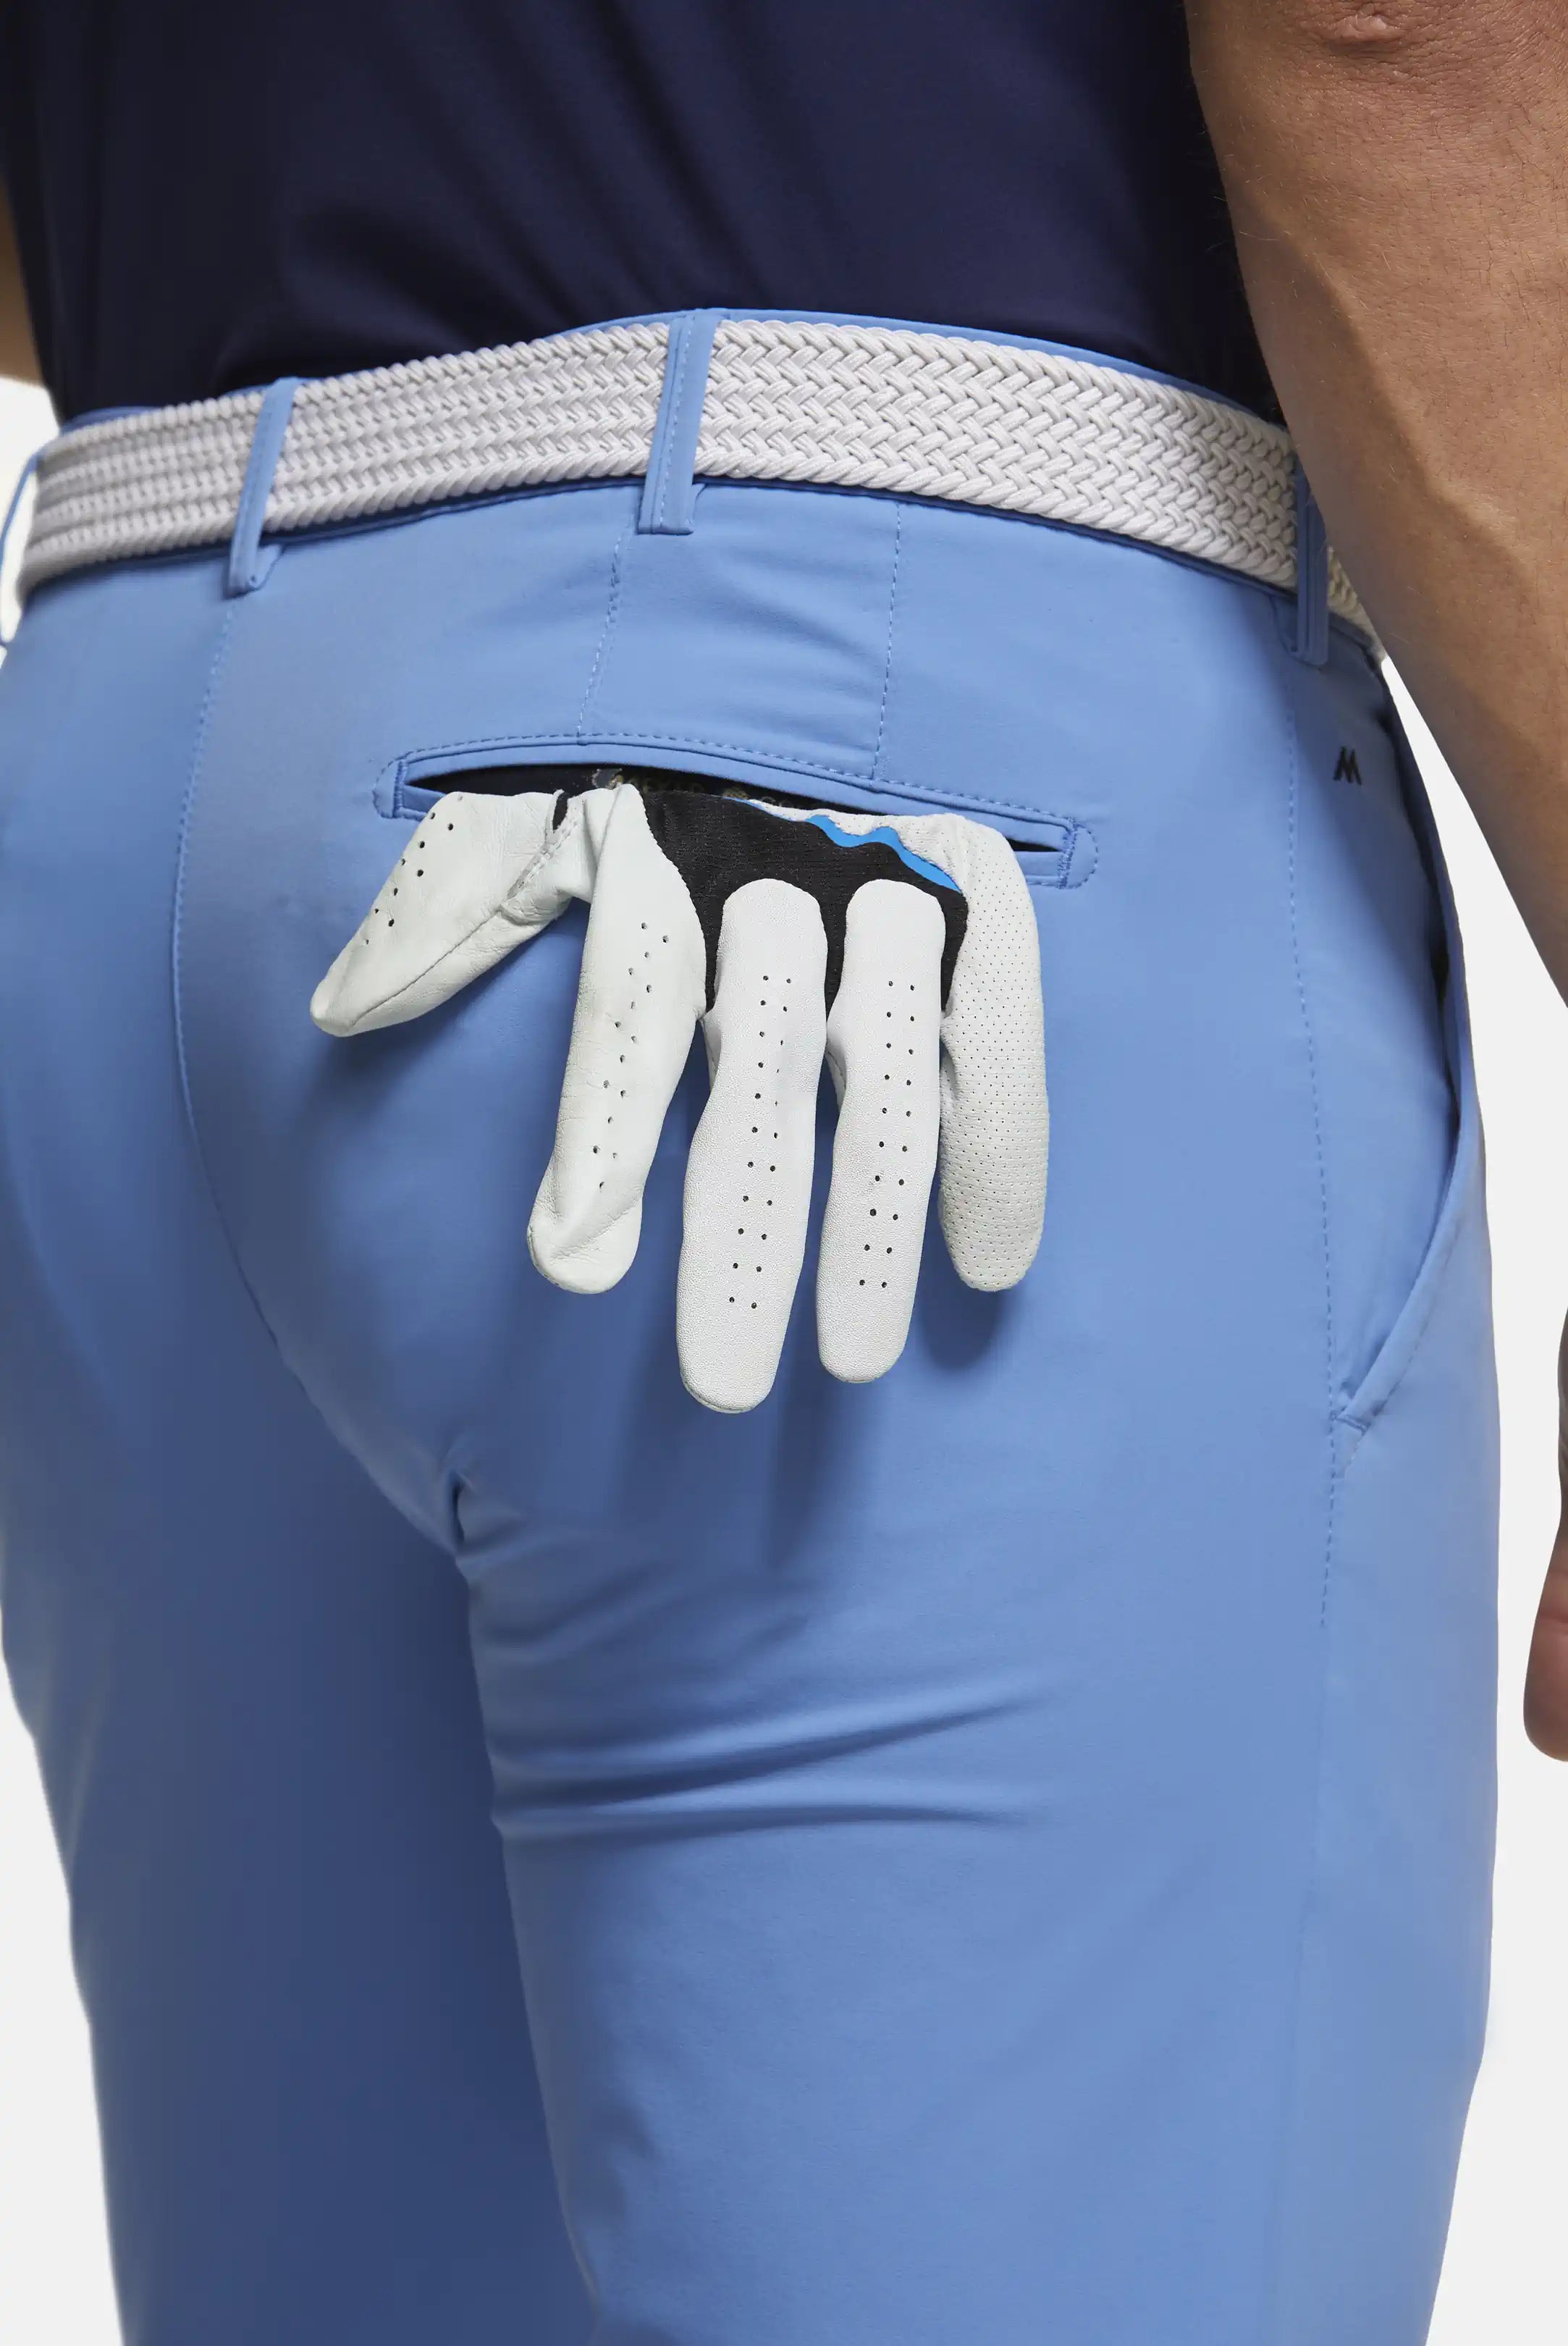 30% OFF - MEYER Golf Trousers - Augusta 8070 High Performance Chinos - Light Blue - Size: 32 SHORT